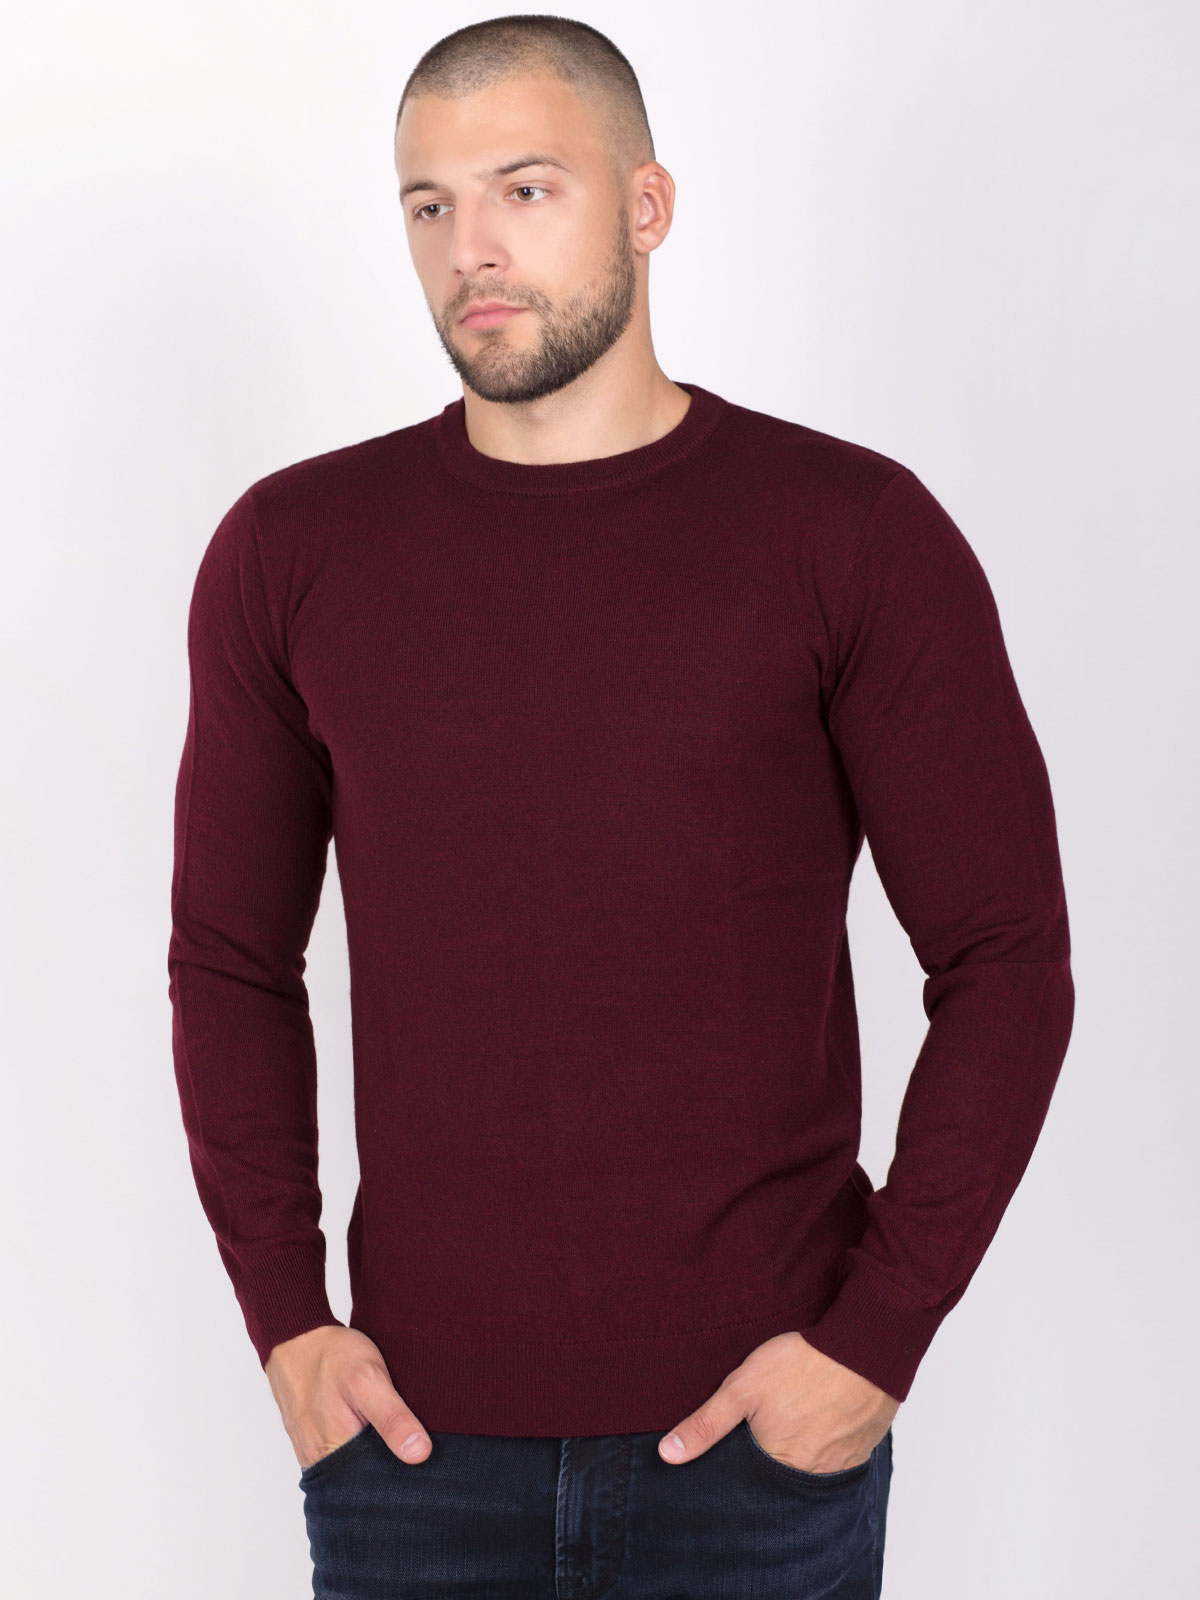 Hoop van Medaille Religieus Merino wool burgundy sweater 33088 -clothing for men online-STYLER